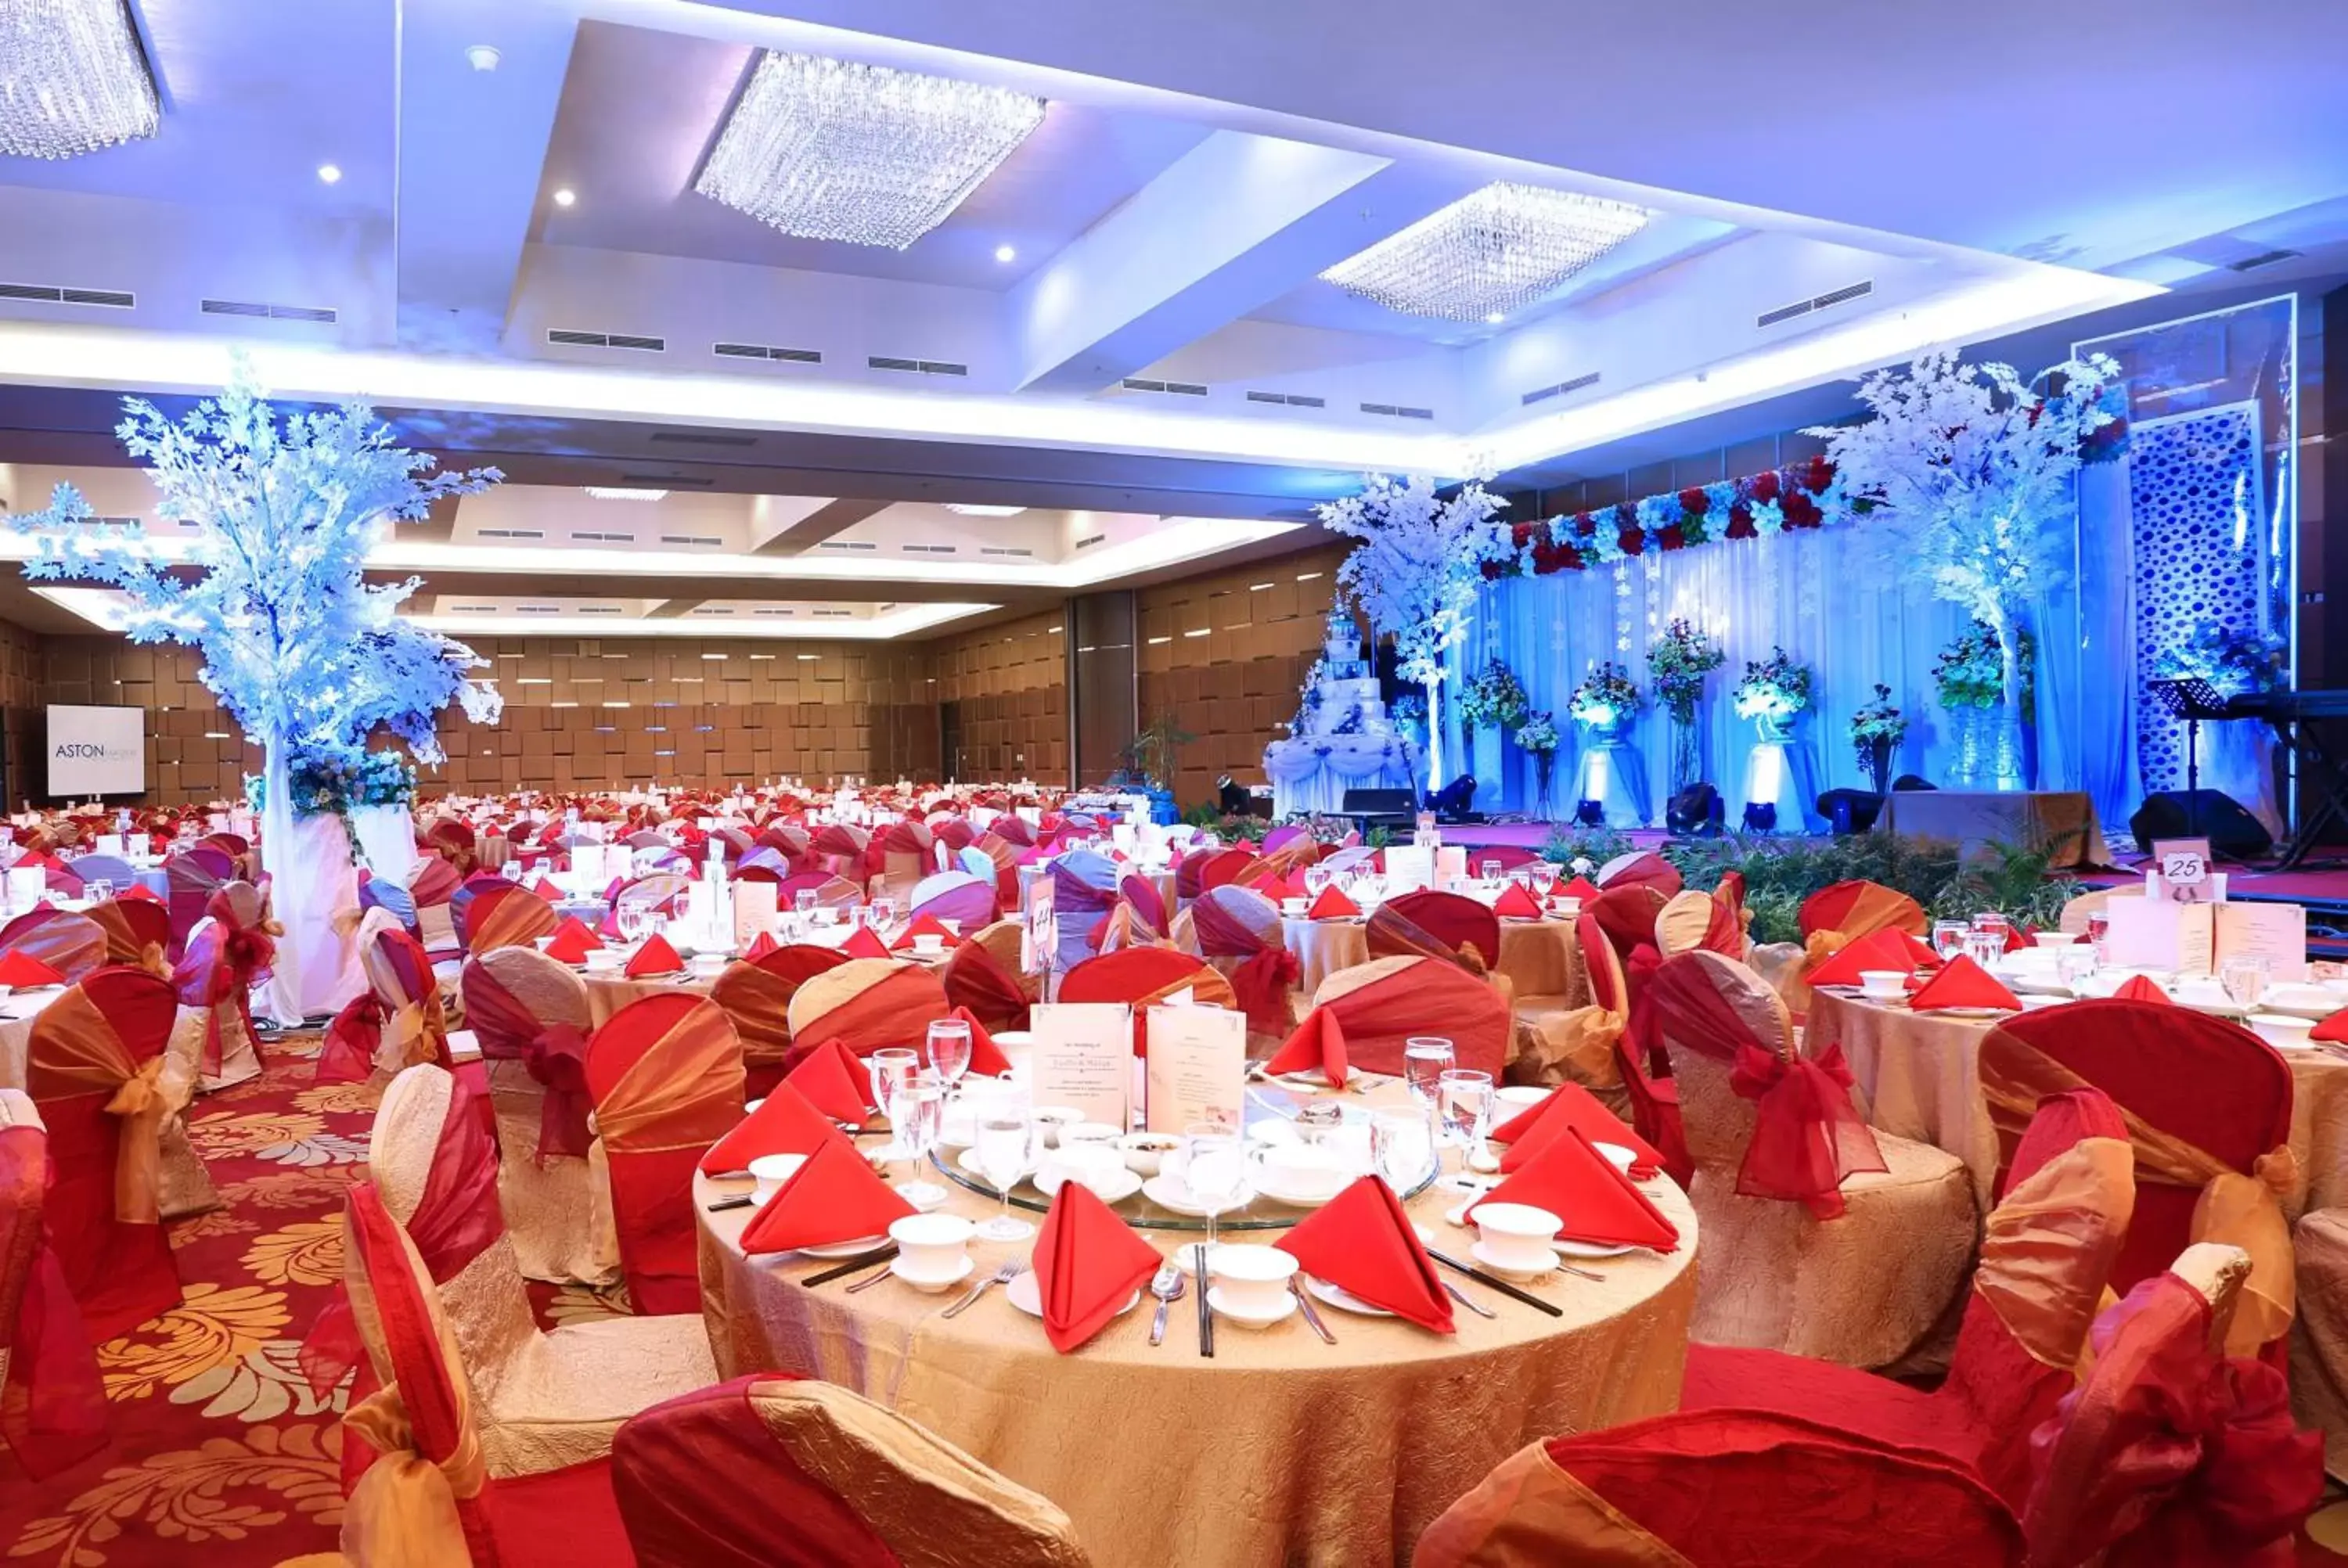 Banquet/Function facilities, Banquet Facilities in ASTON Madiun Hotel & Conference Center